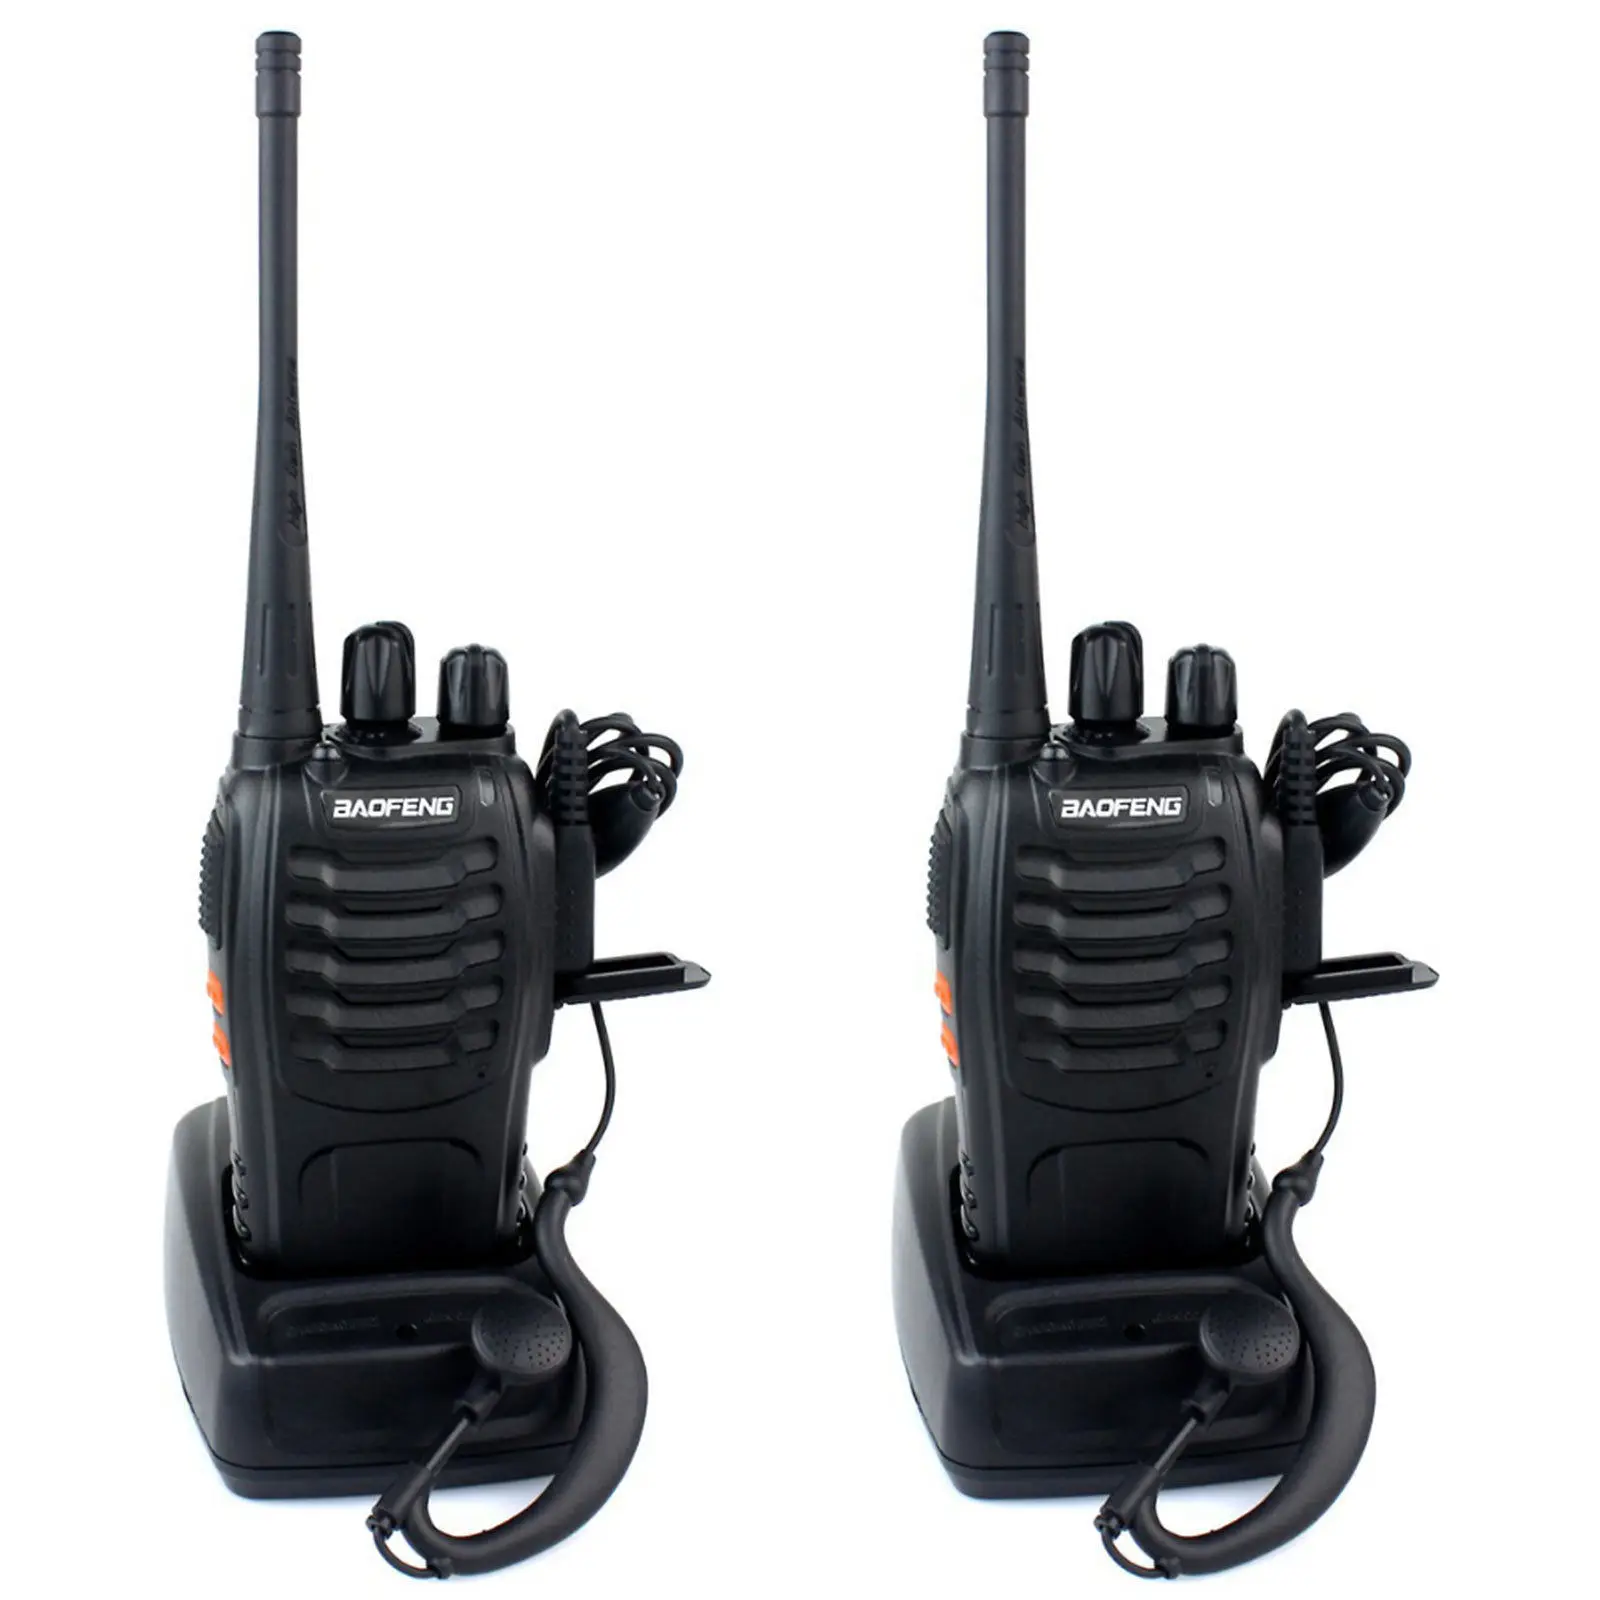 

baofeng bf 888s two way radio Handheld Transceiver Portable Radio wireless intercom BF-888S walkie talkie UHF 400-470MHz, Black